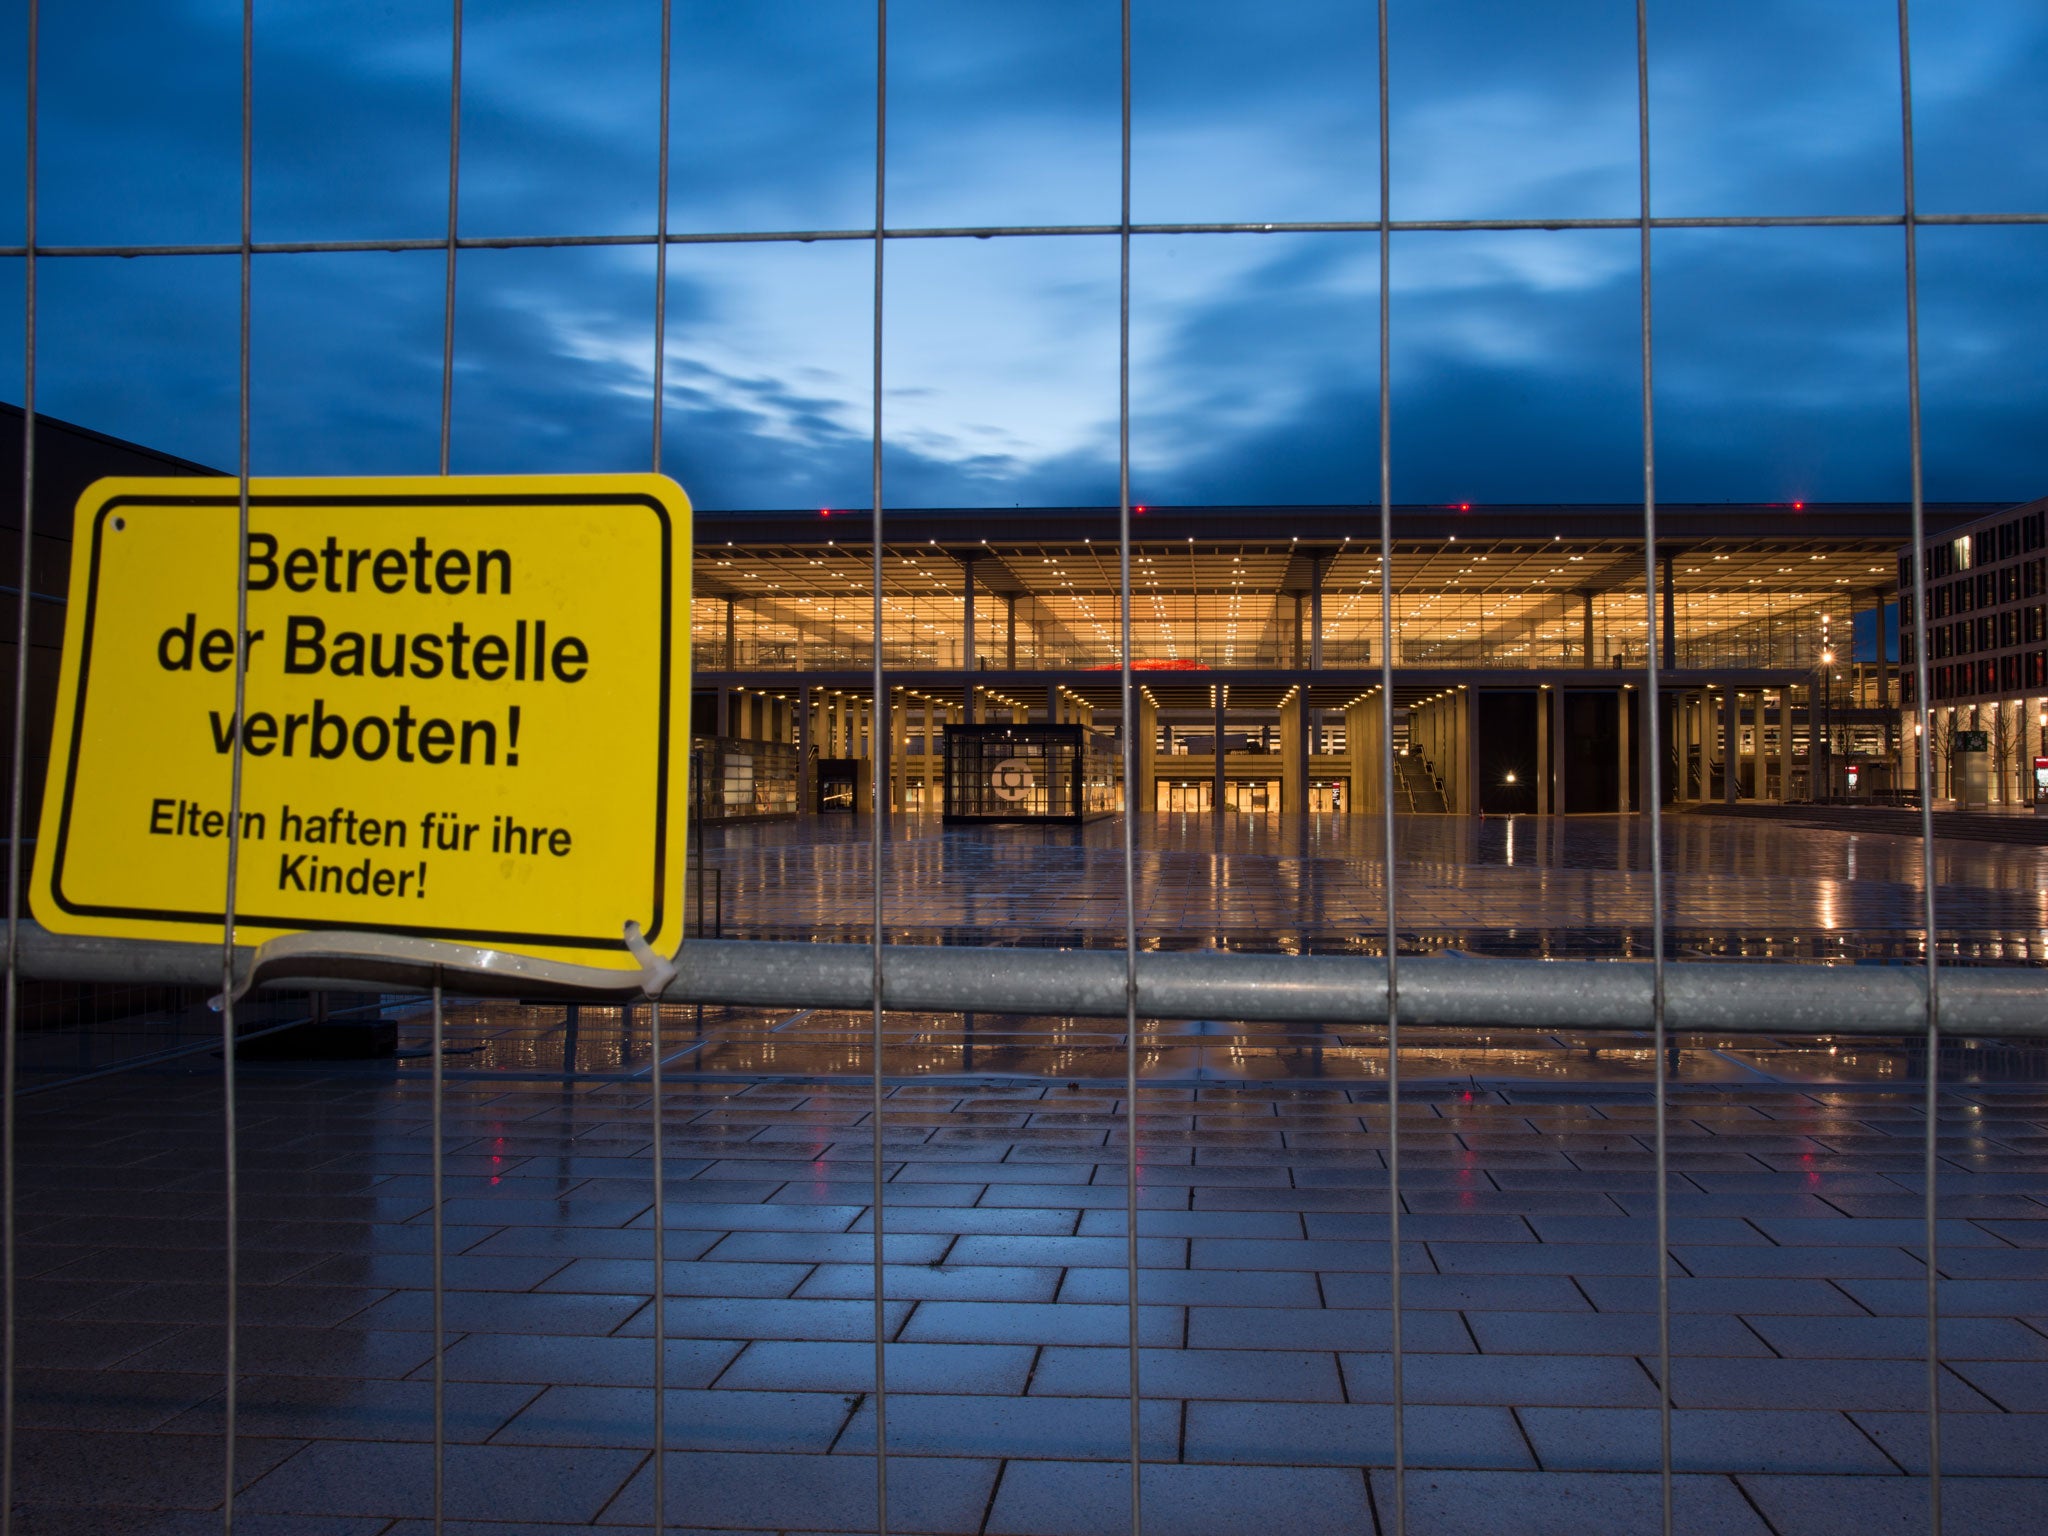 Berlin Brandenburg Willy Brandt airport’s lights never shut off